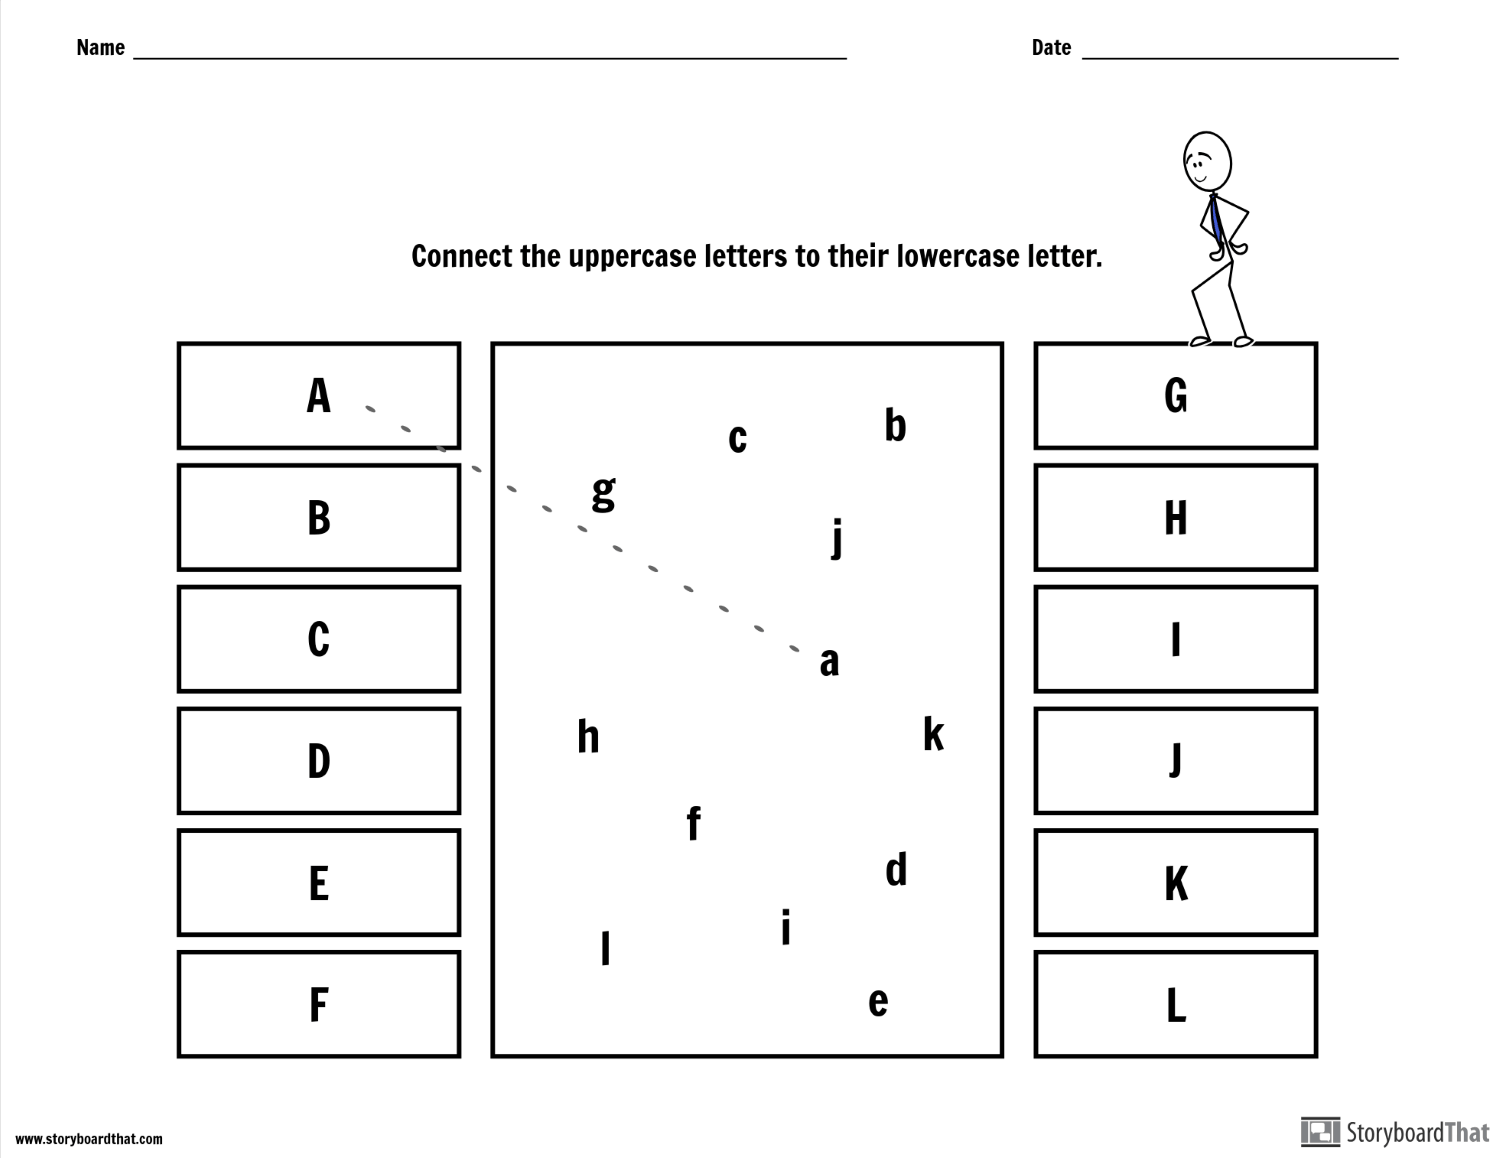 Exemple de Feuille de Calcul de Correspondance de Lettres